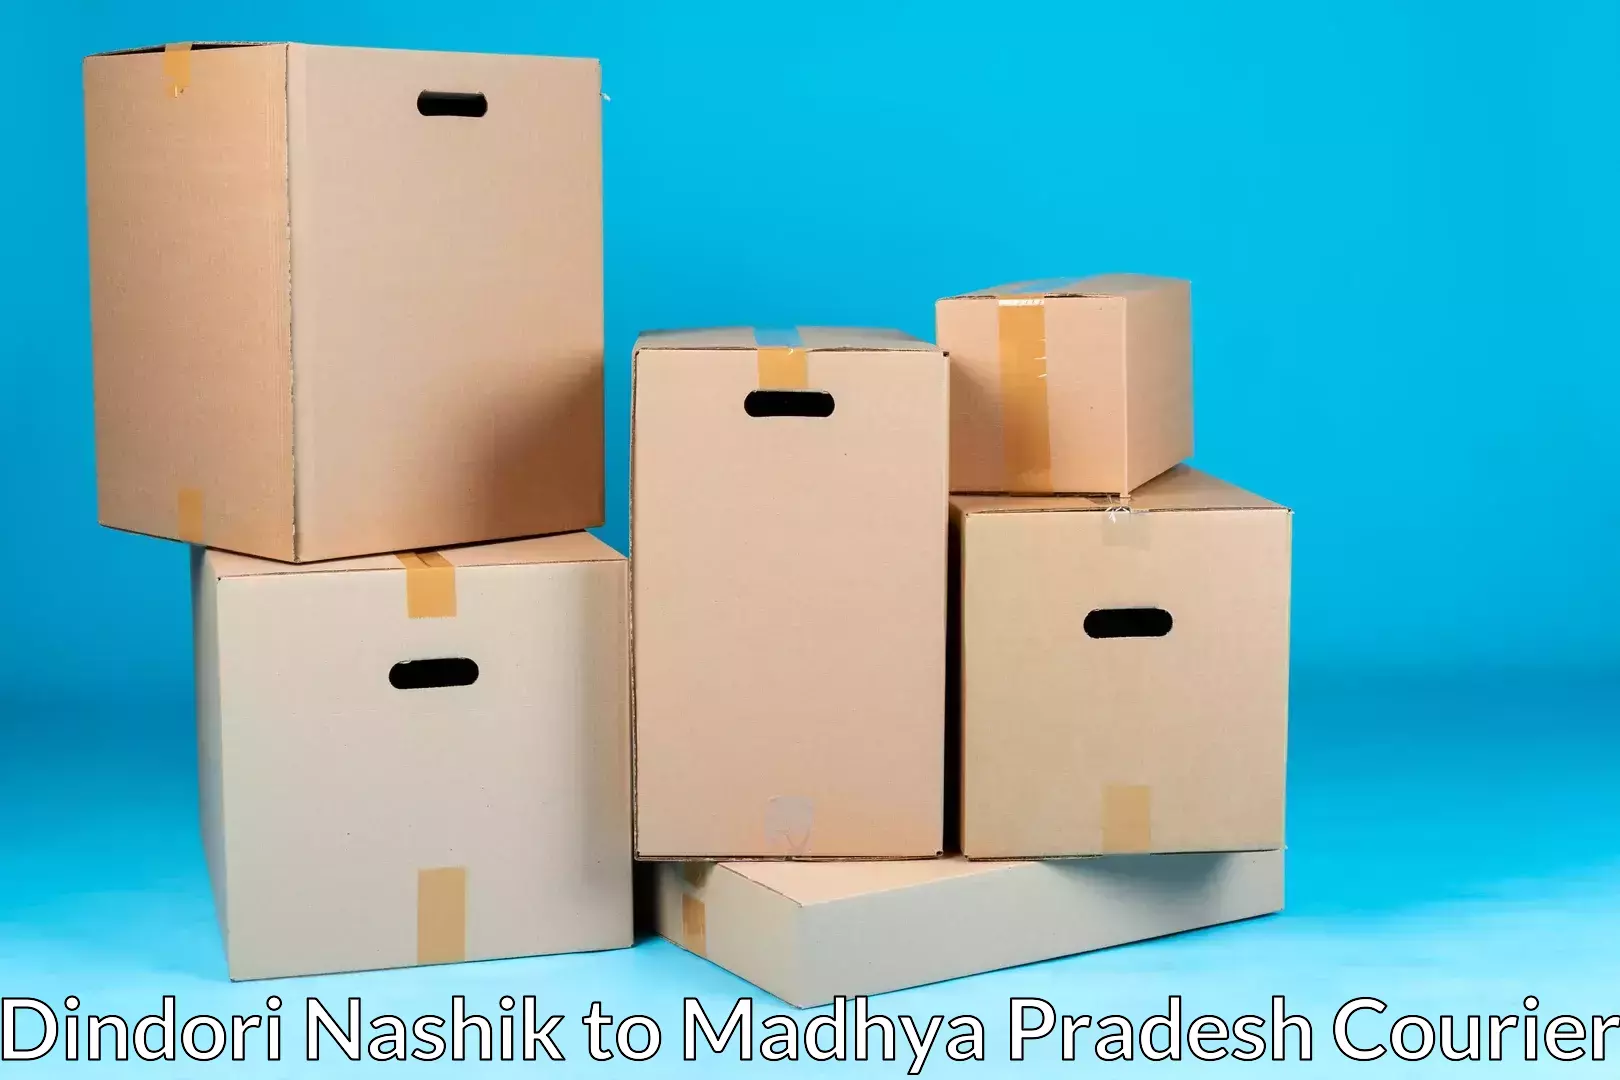 Professional moving company Dindori Nashik to Khajuraho